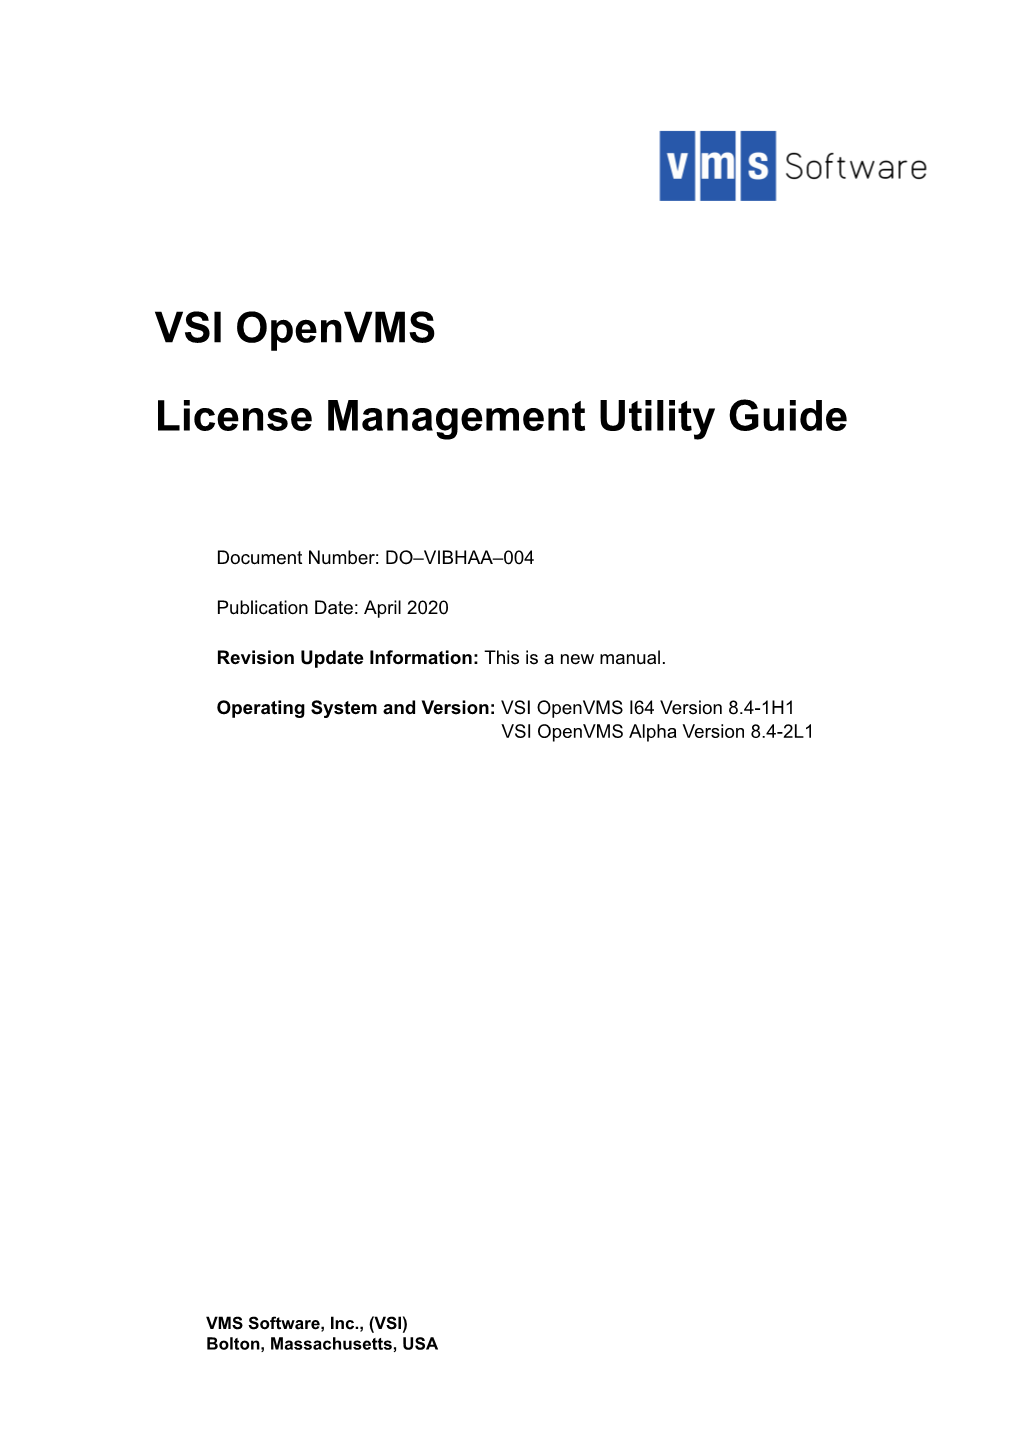 VSI Openvms License Management Utility Guide